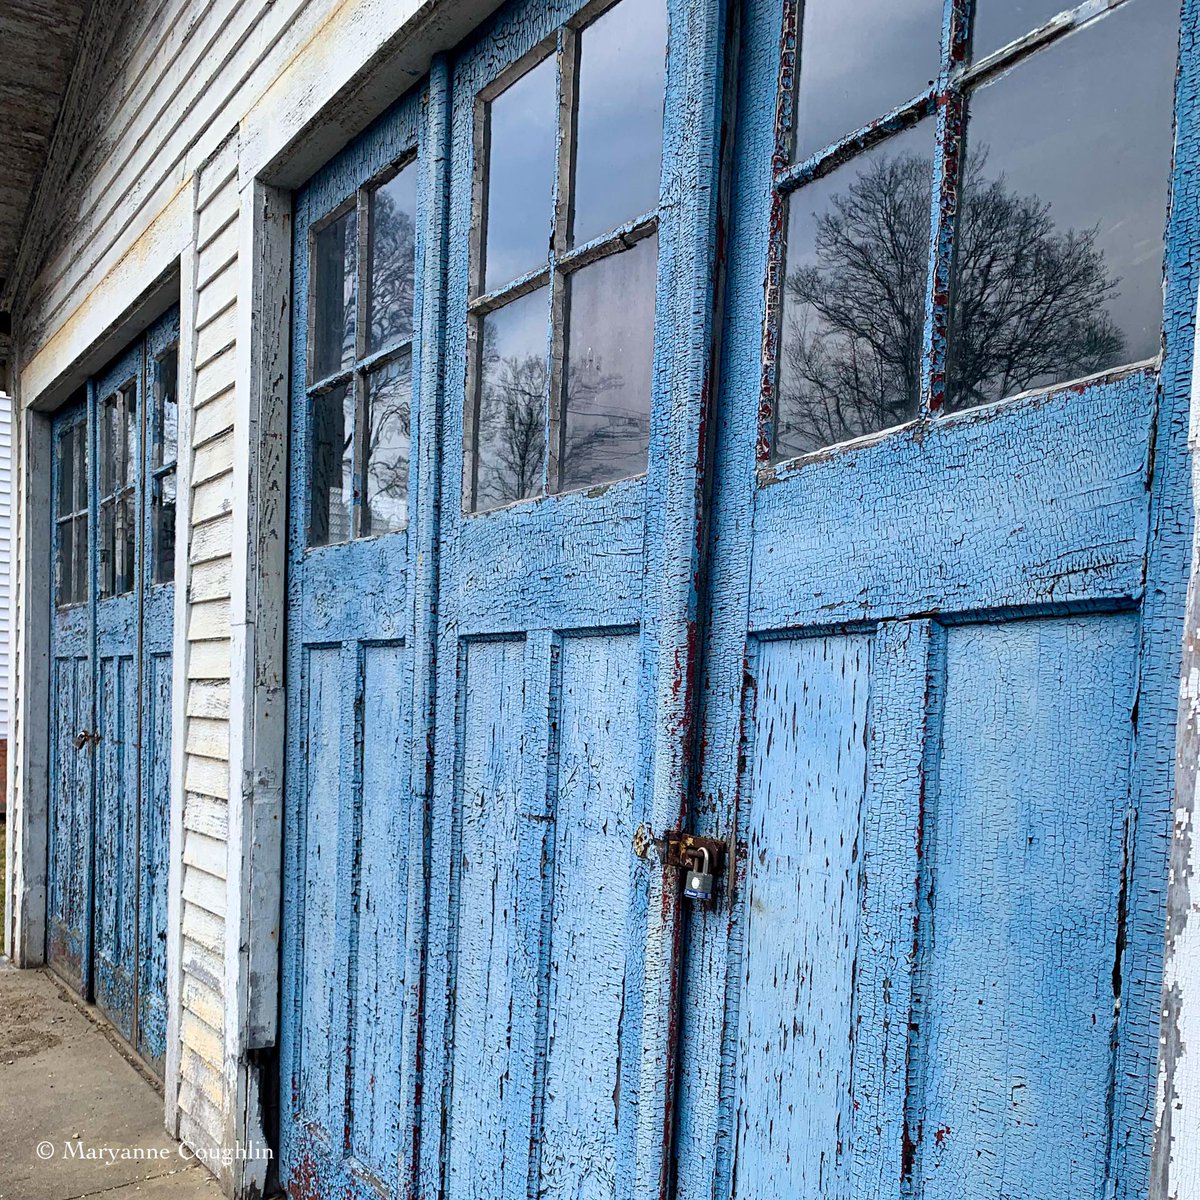 Blue doors 💙

#momentsofbeauty #beautiful #colorful #FridayThoughts 
#massachusetts #newengland 
#streetphotography 
#newenglandpictures #roadtripnewengland #wallstalking #blue #textures #thephotohour #streetphoto #ihaveathingfordoors